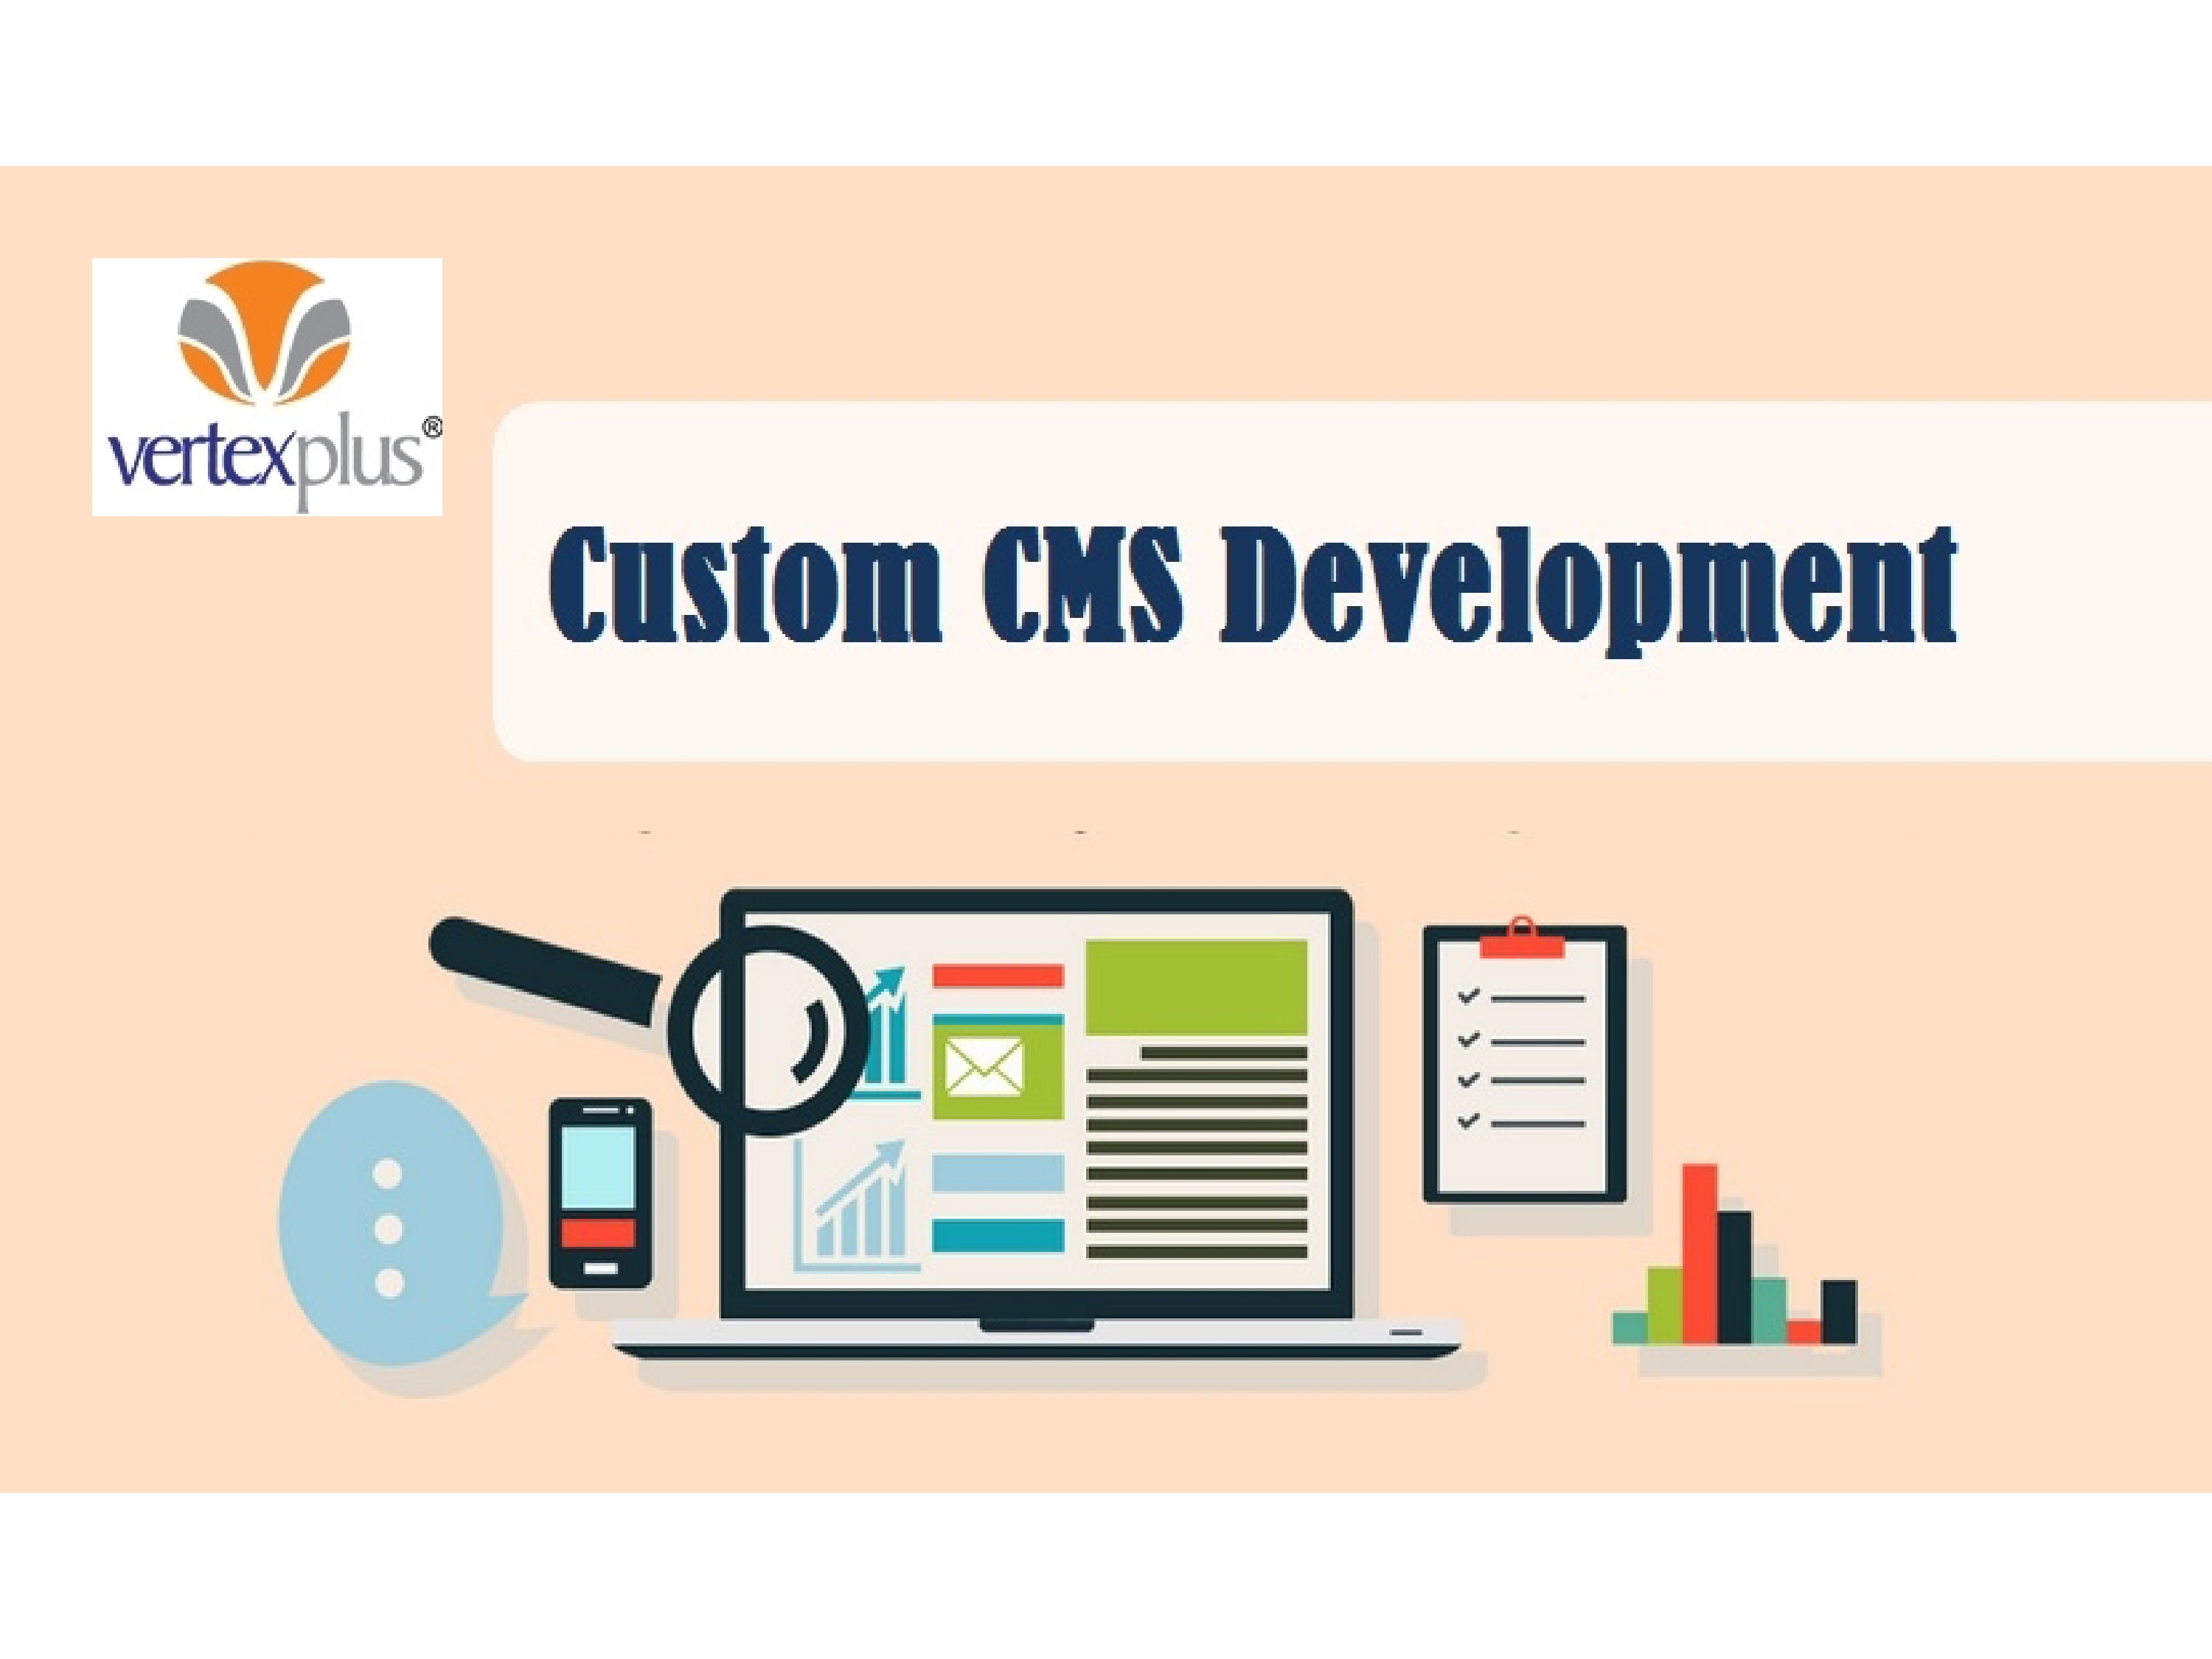 Expert CMS Development services, Easy to manage dashboard Learn more about CMS Development Services, visit http://www.vertexplus.com/cms-development.
 by vertexplus